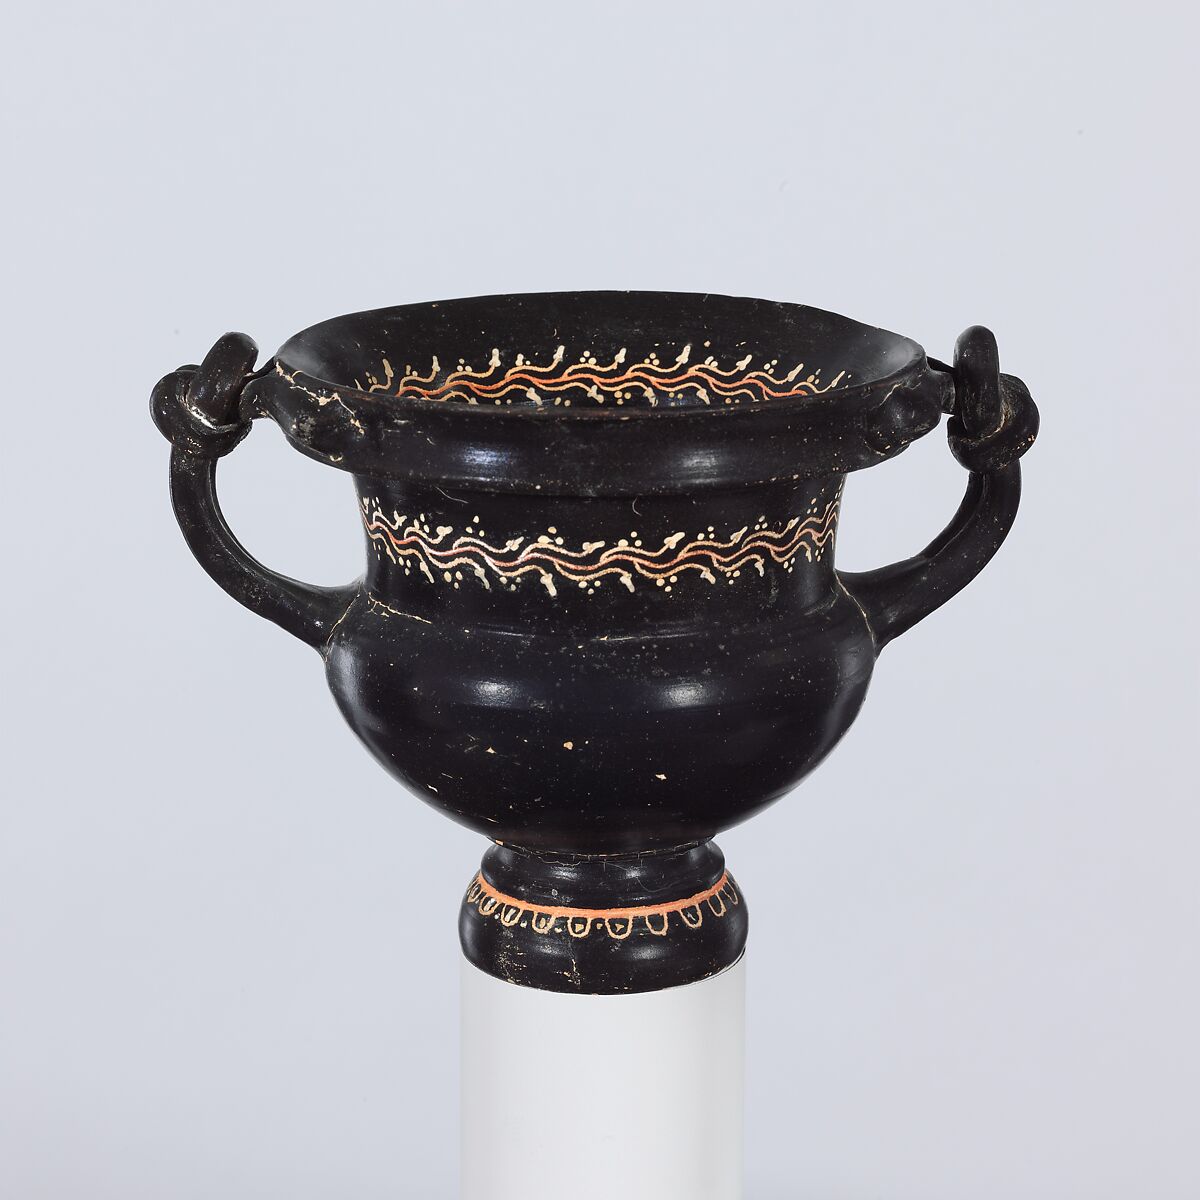 Terracotta kantharos (drinking cup), Terracotta, Greek, South Italian, Campanian, Teano 